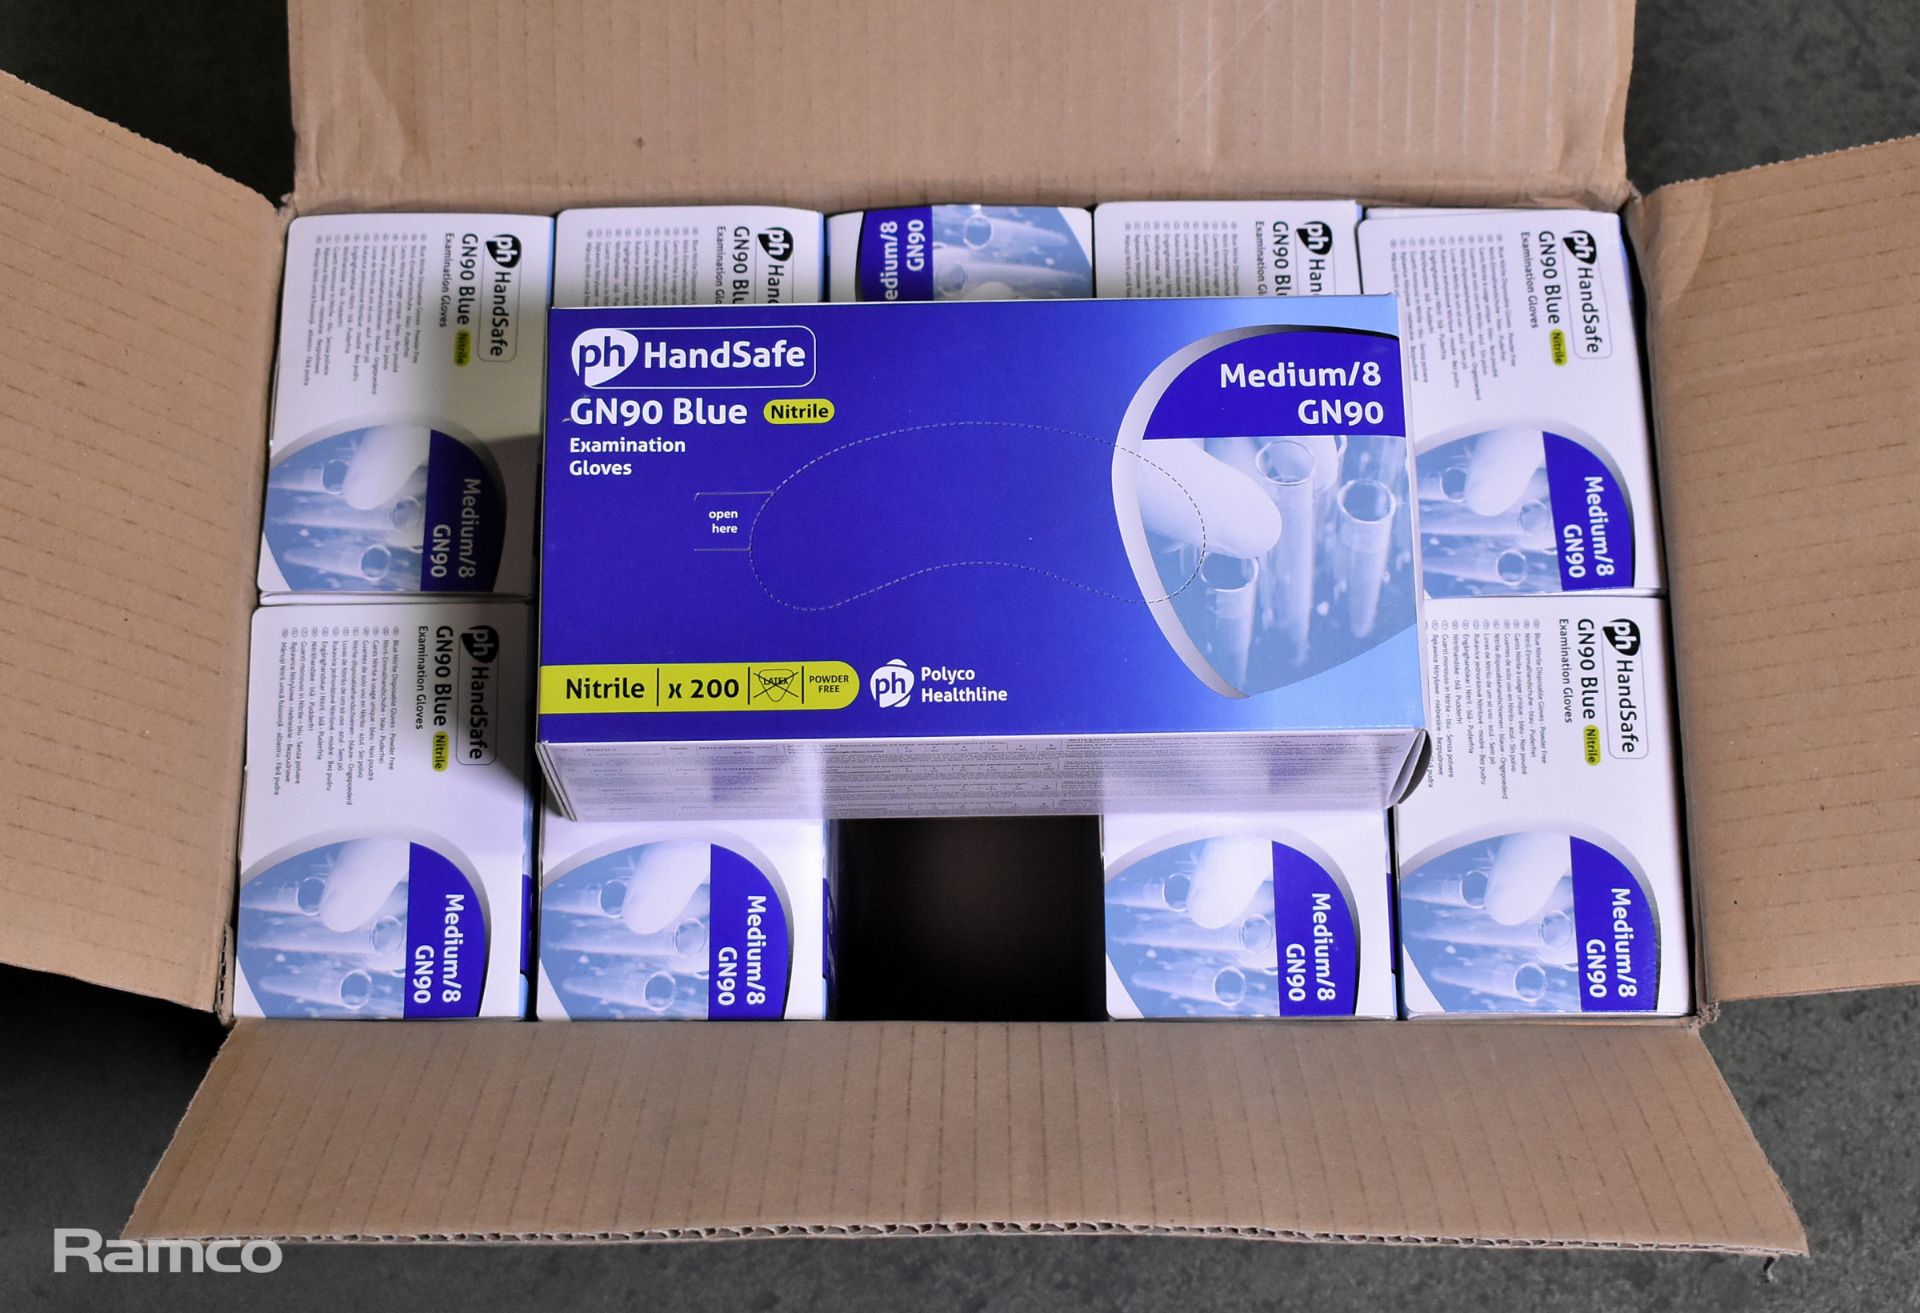 HandSafe GN90 powder free blue nitrile exam gloves - medium - 10 packs per case - Image 2 of 3